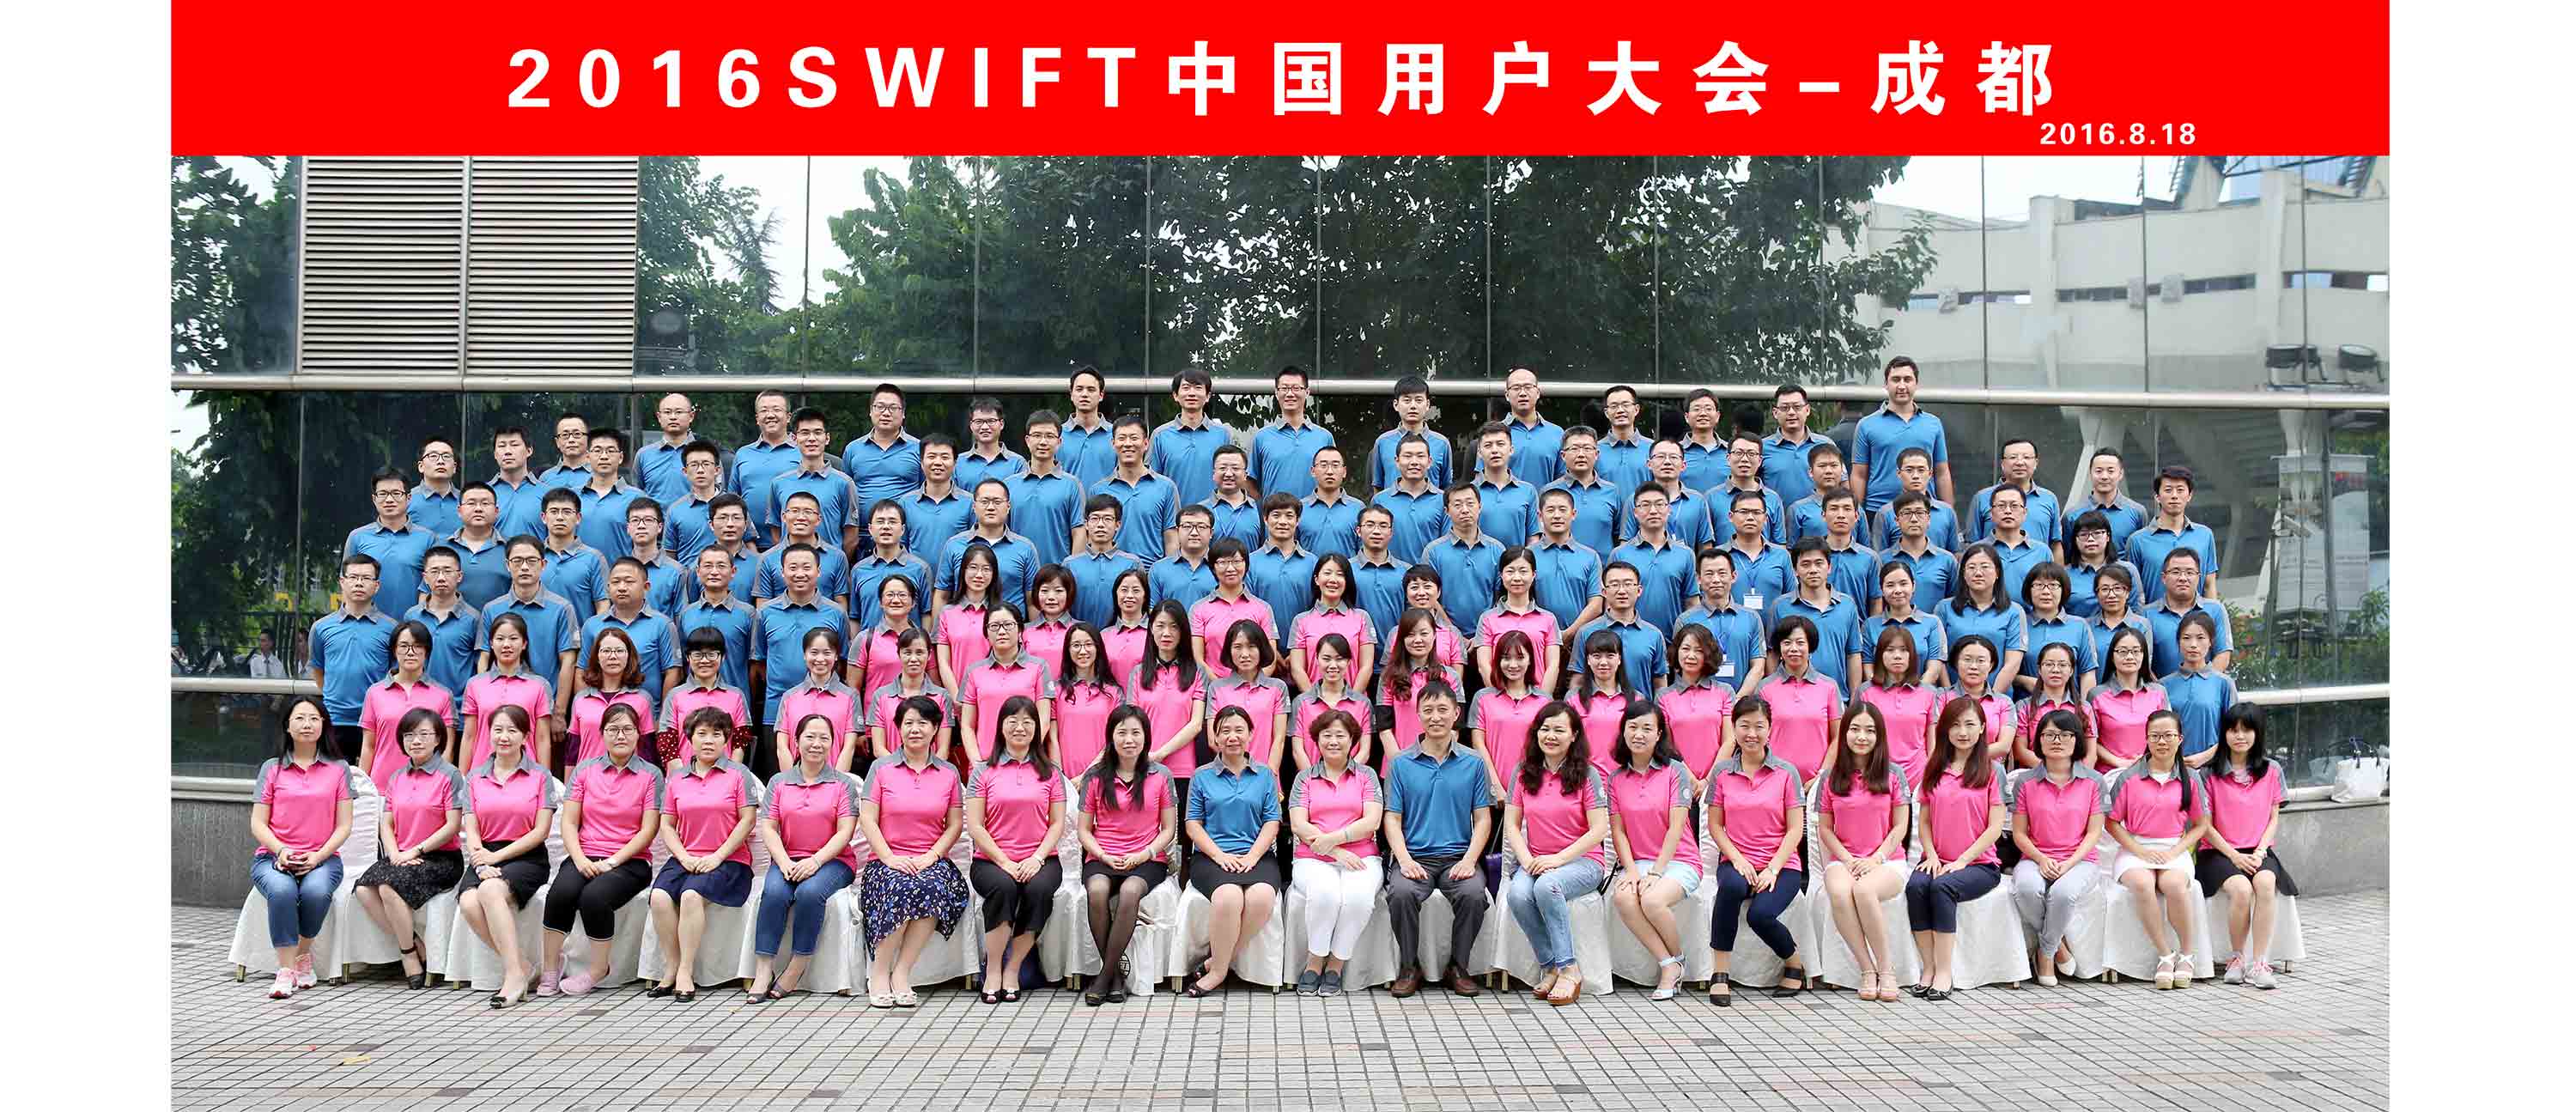 2016WIFT中国用户大会会议合影拍摄